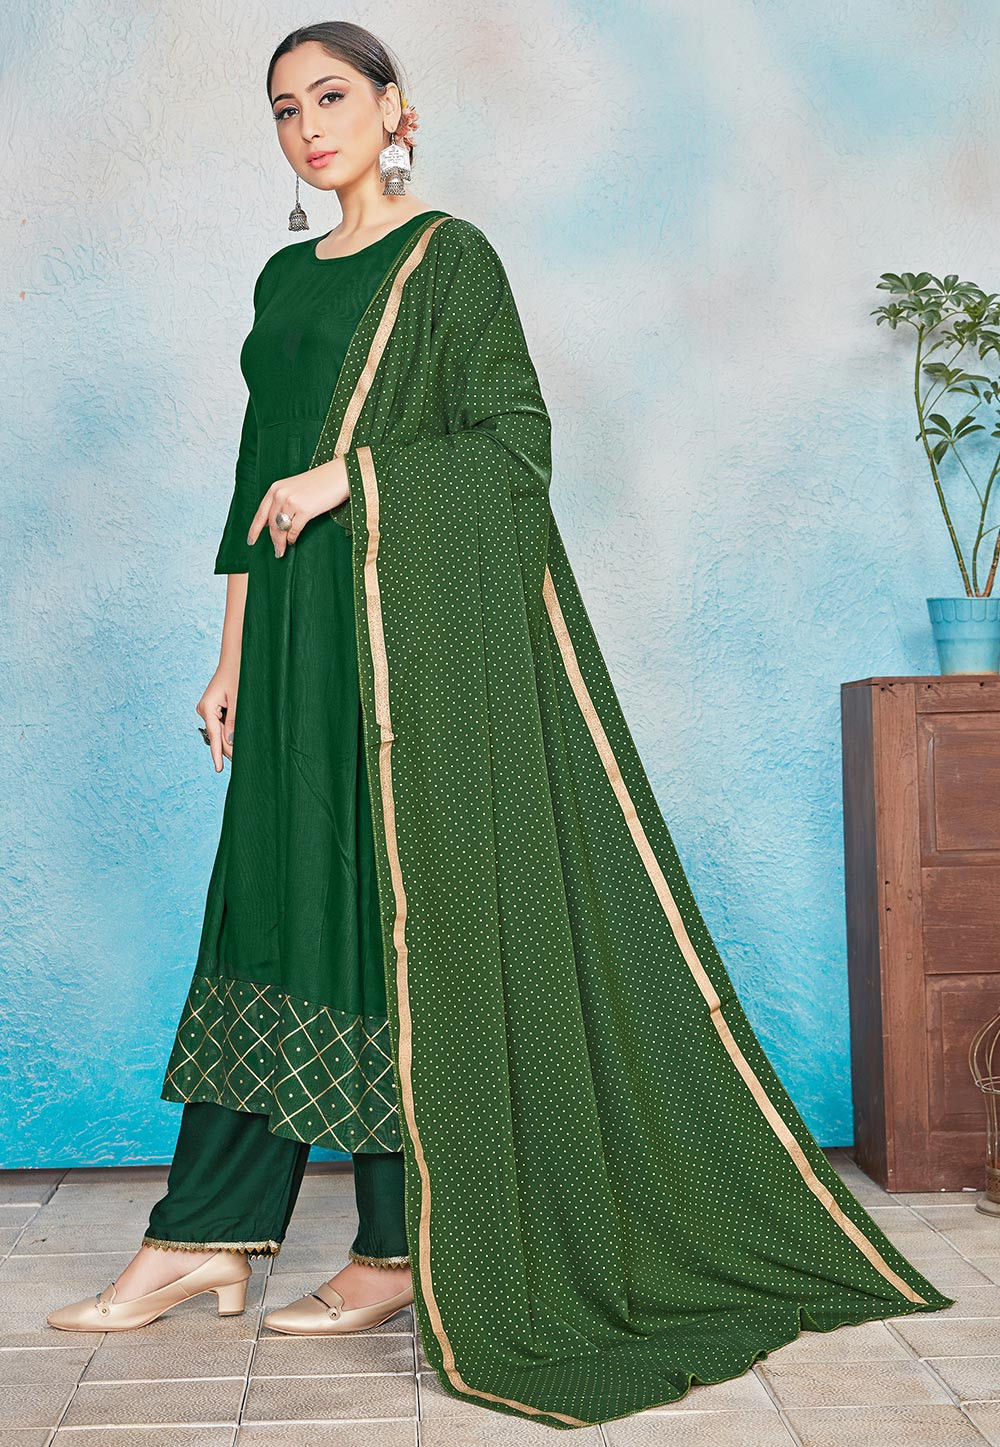 Foil Printed Rayon Anarkali Suit in Green : KJC585